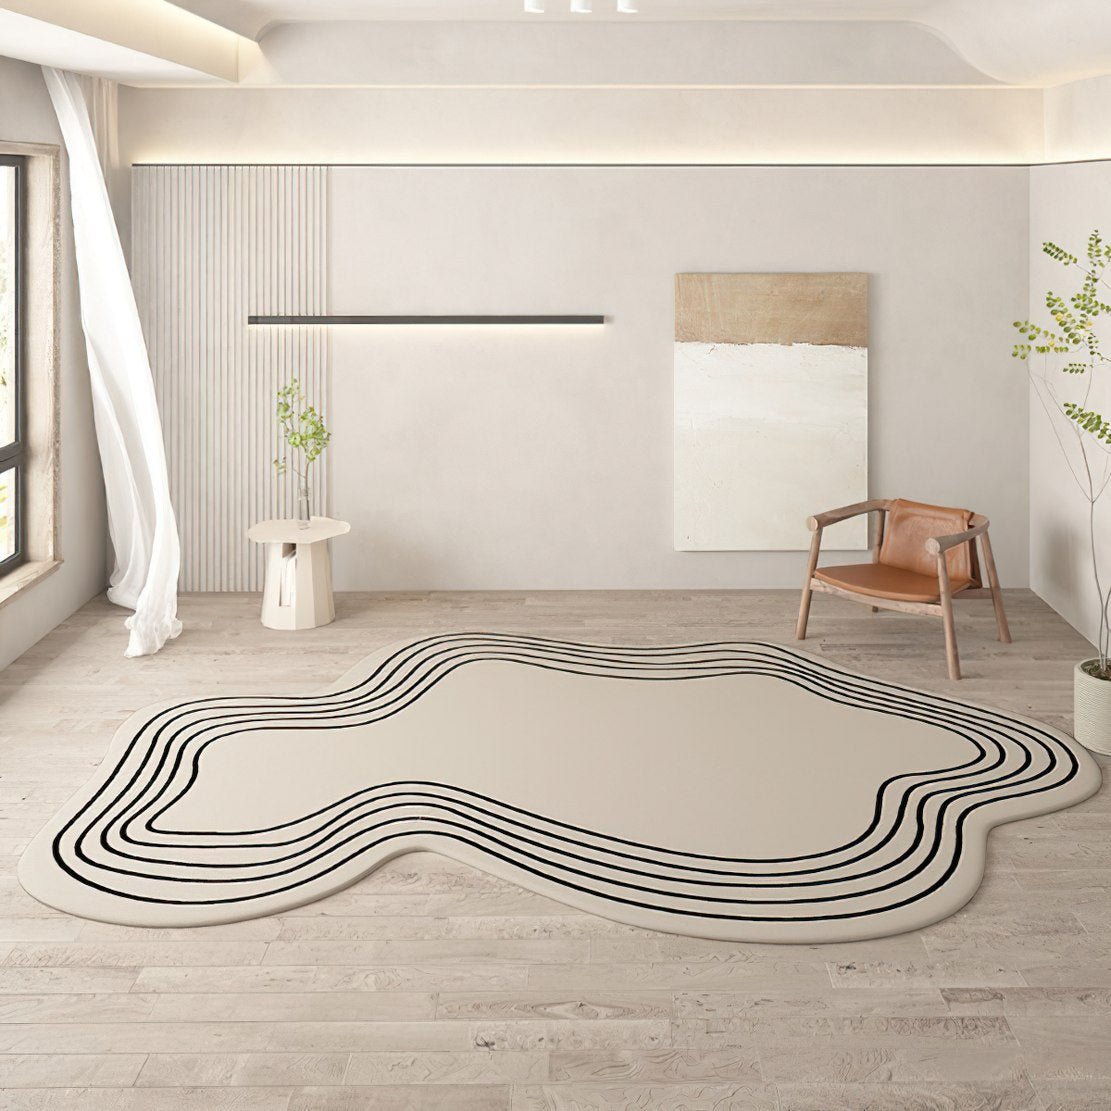 irregular shape white floor rug with black lines.